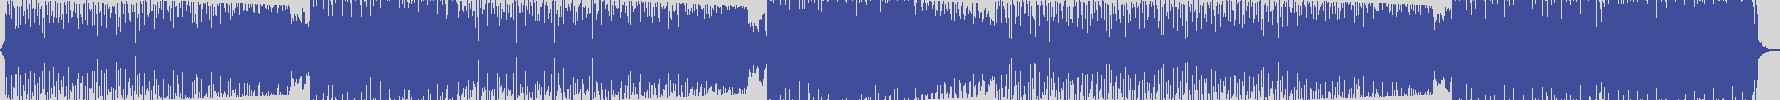 suxess [SX034] Dyson Kellerman - Right Now [Radio Edit] audio wave form